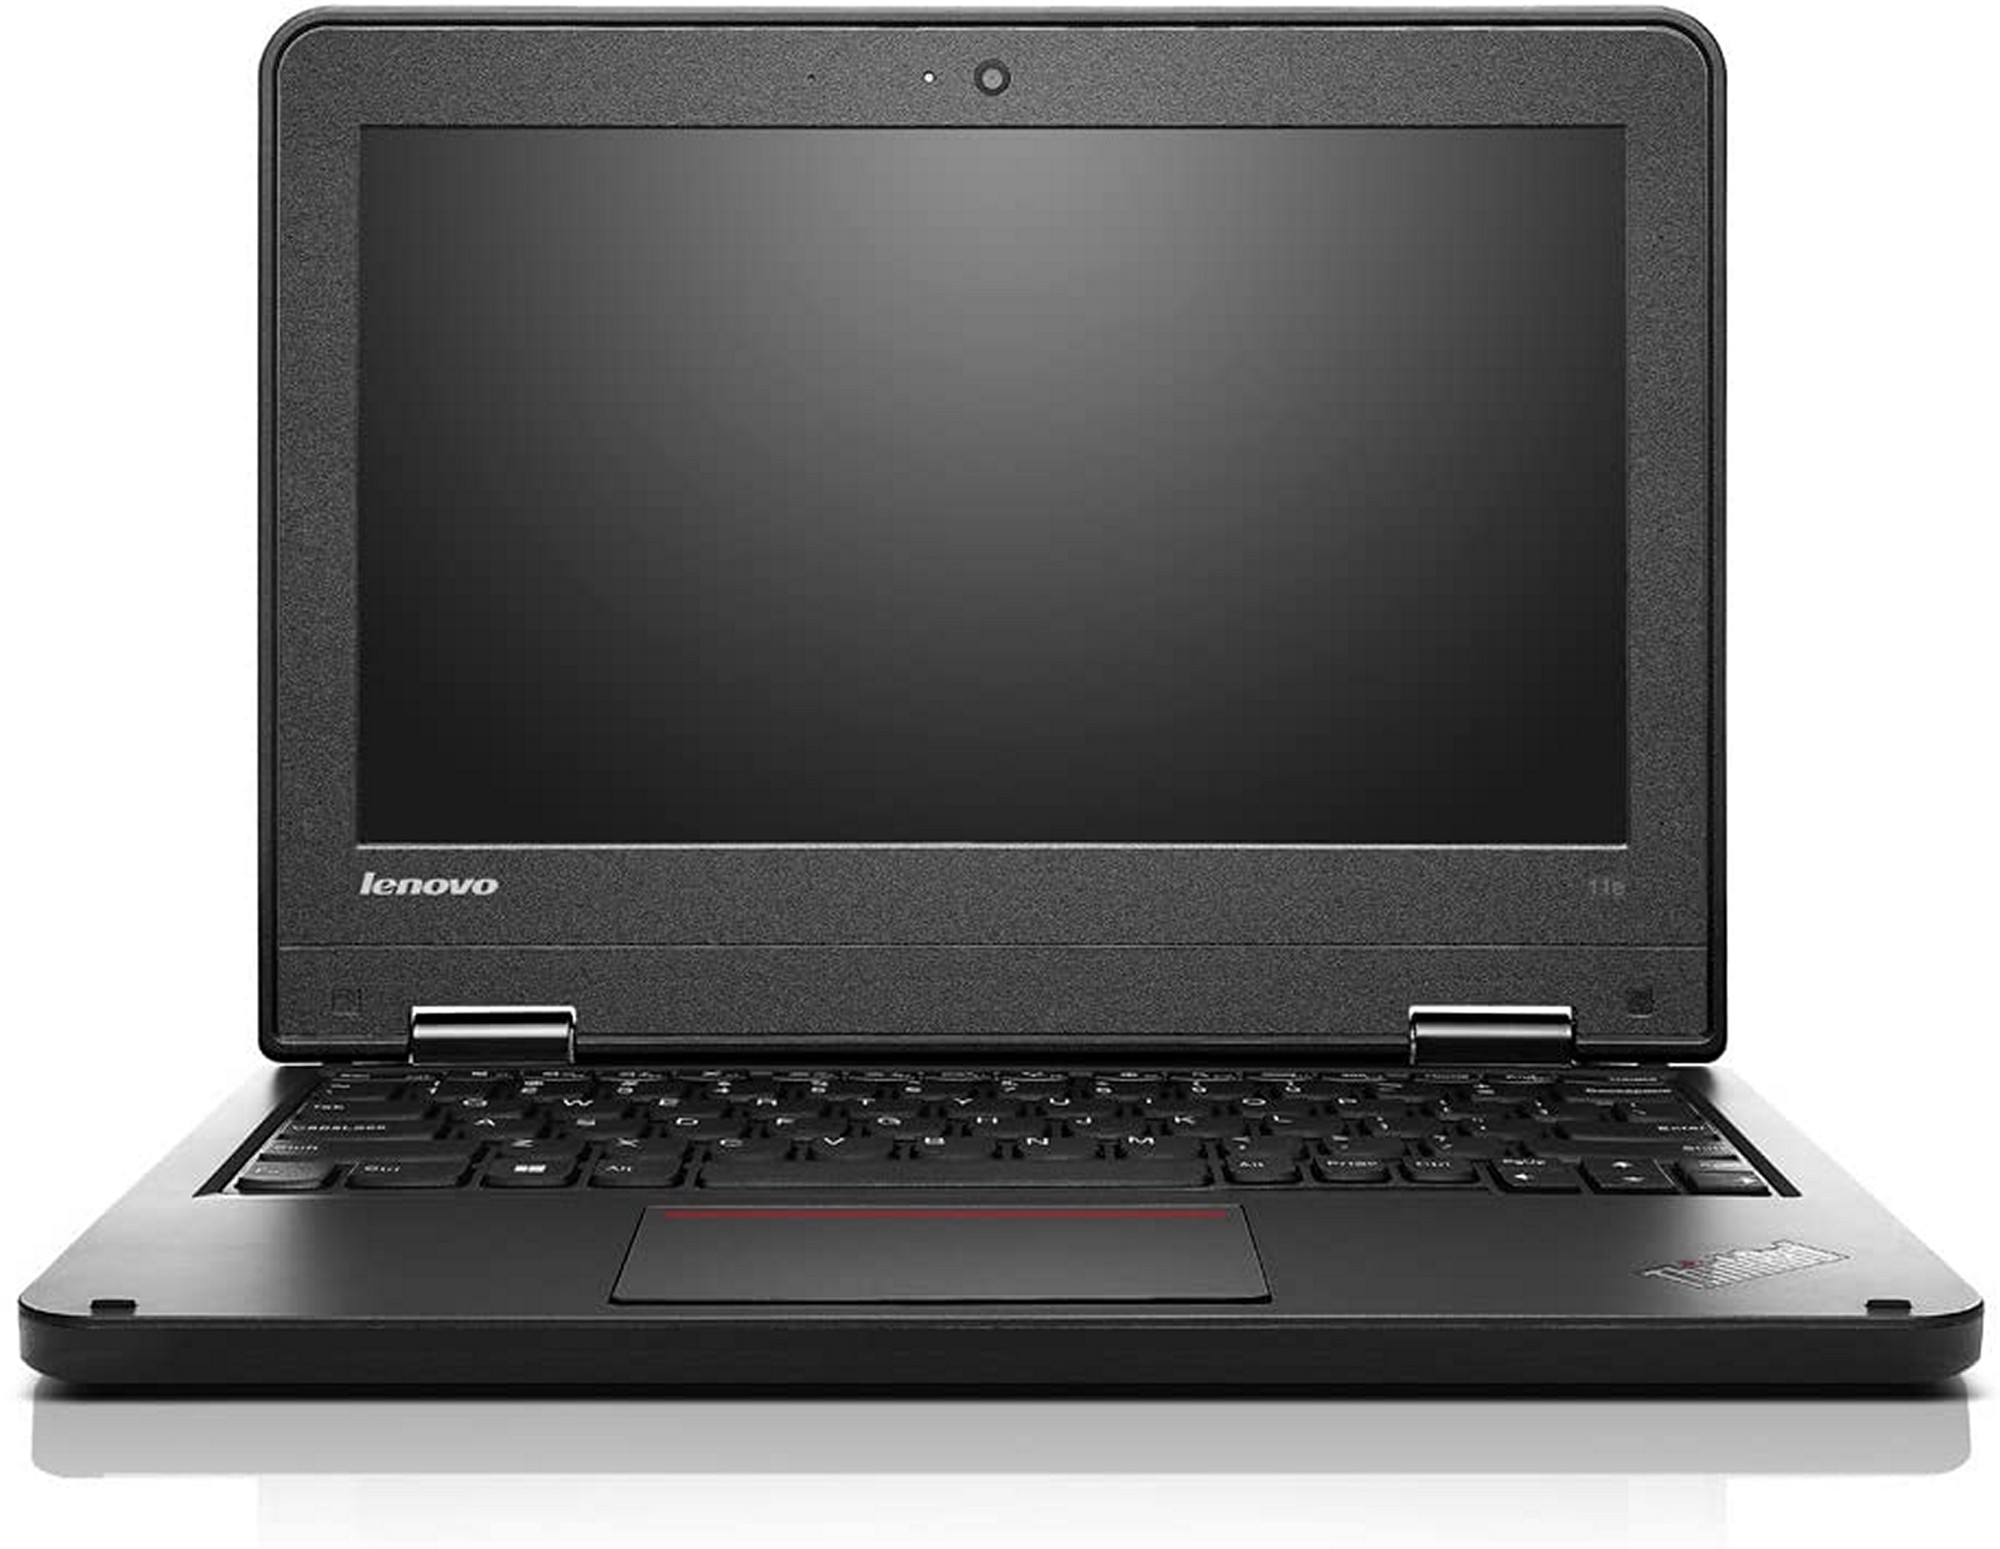 Lenovo Thinkpad 11E Laptop Computer, 1.60 GHz Intel Celeron, 4GB DDR3 RAM, 128GB SSD Hard Drive, Windows 10 Home 64 Bit, 11" Screen (Renewed)